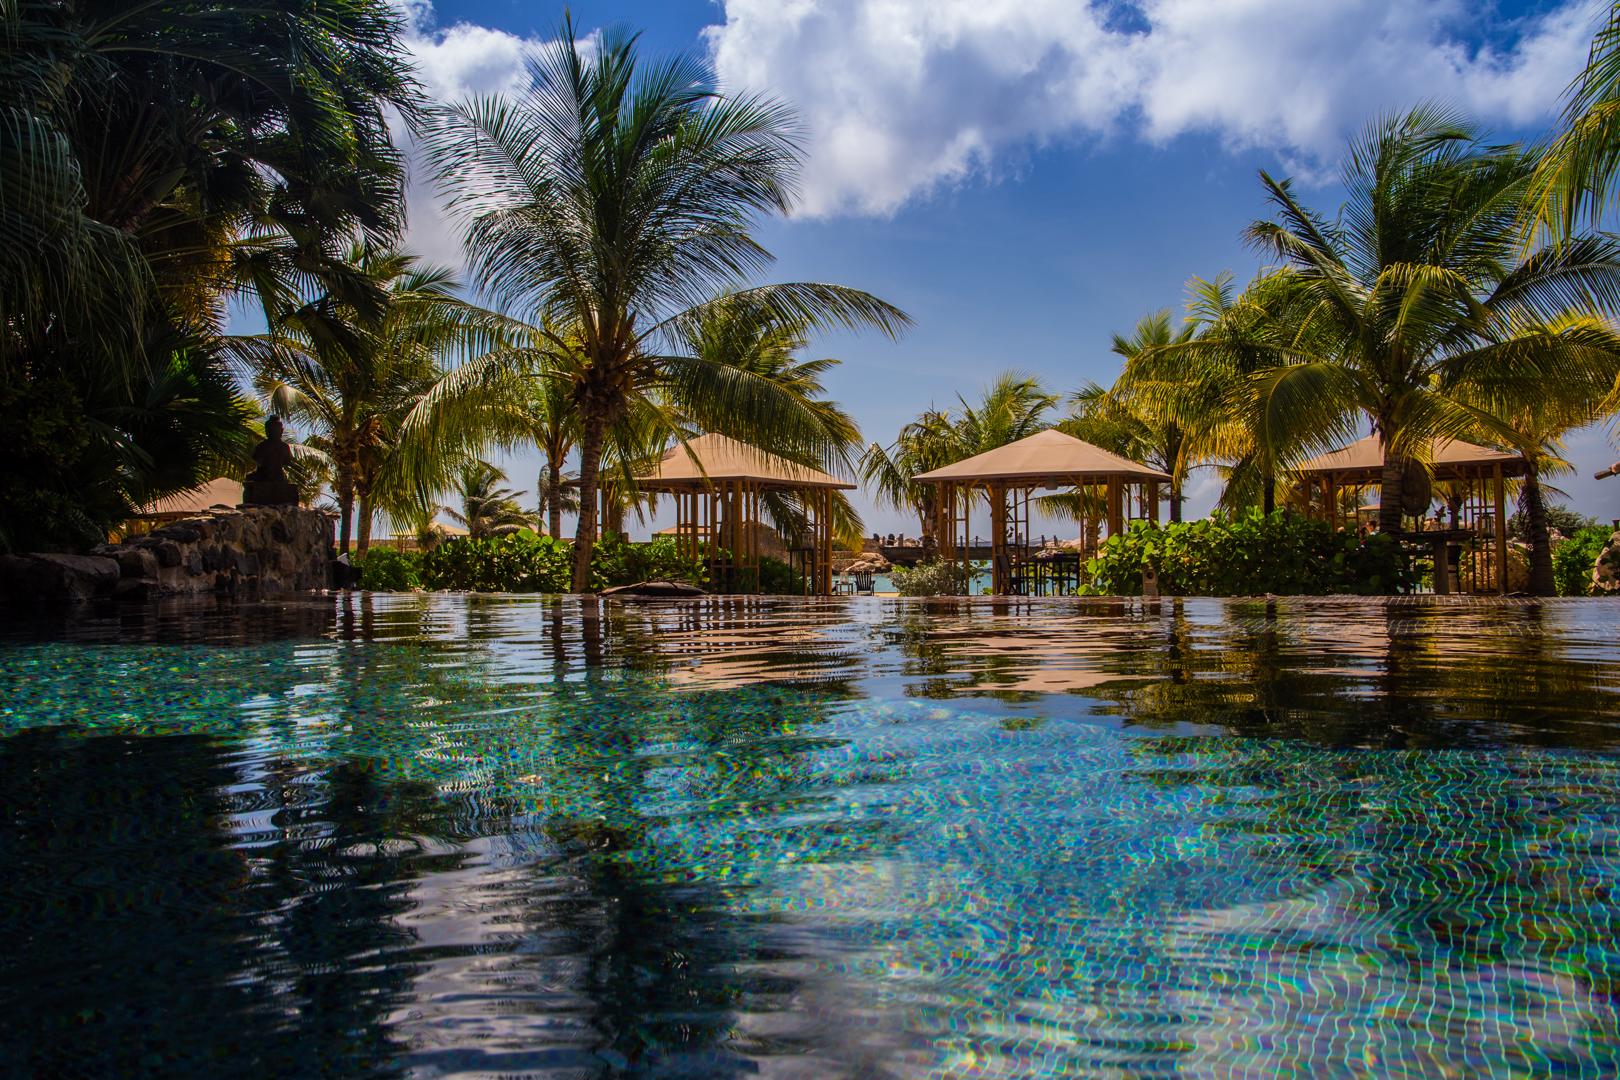 Baoase Luxury Resort - Willemstad - Curacao